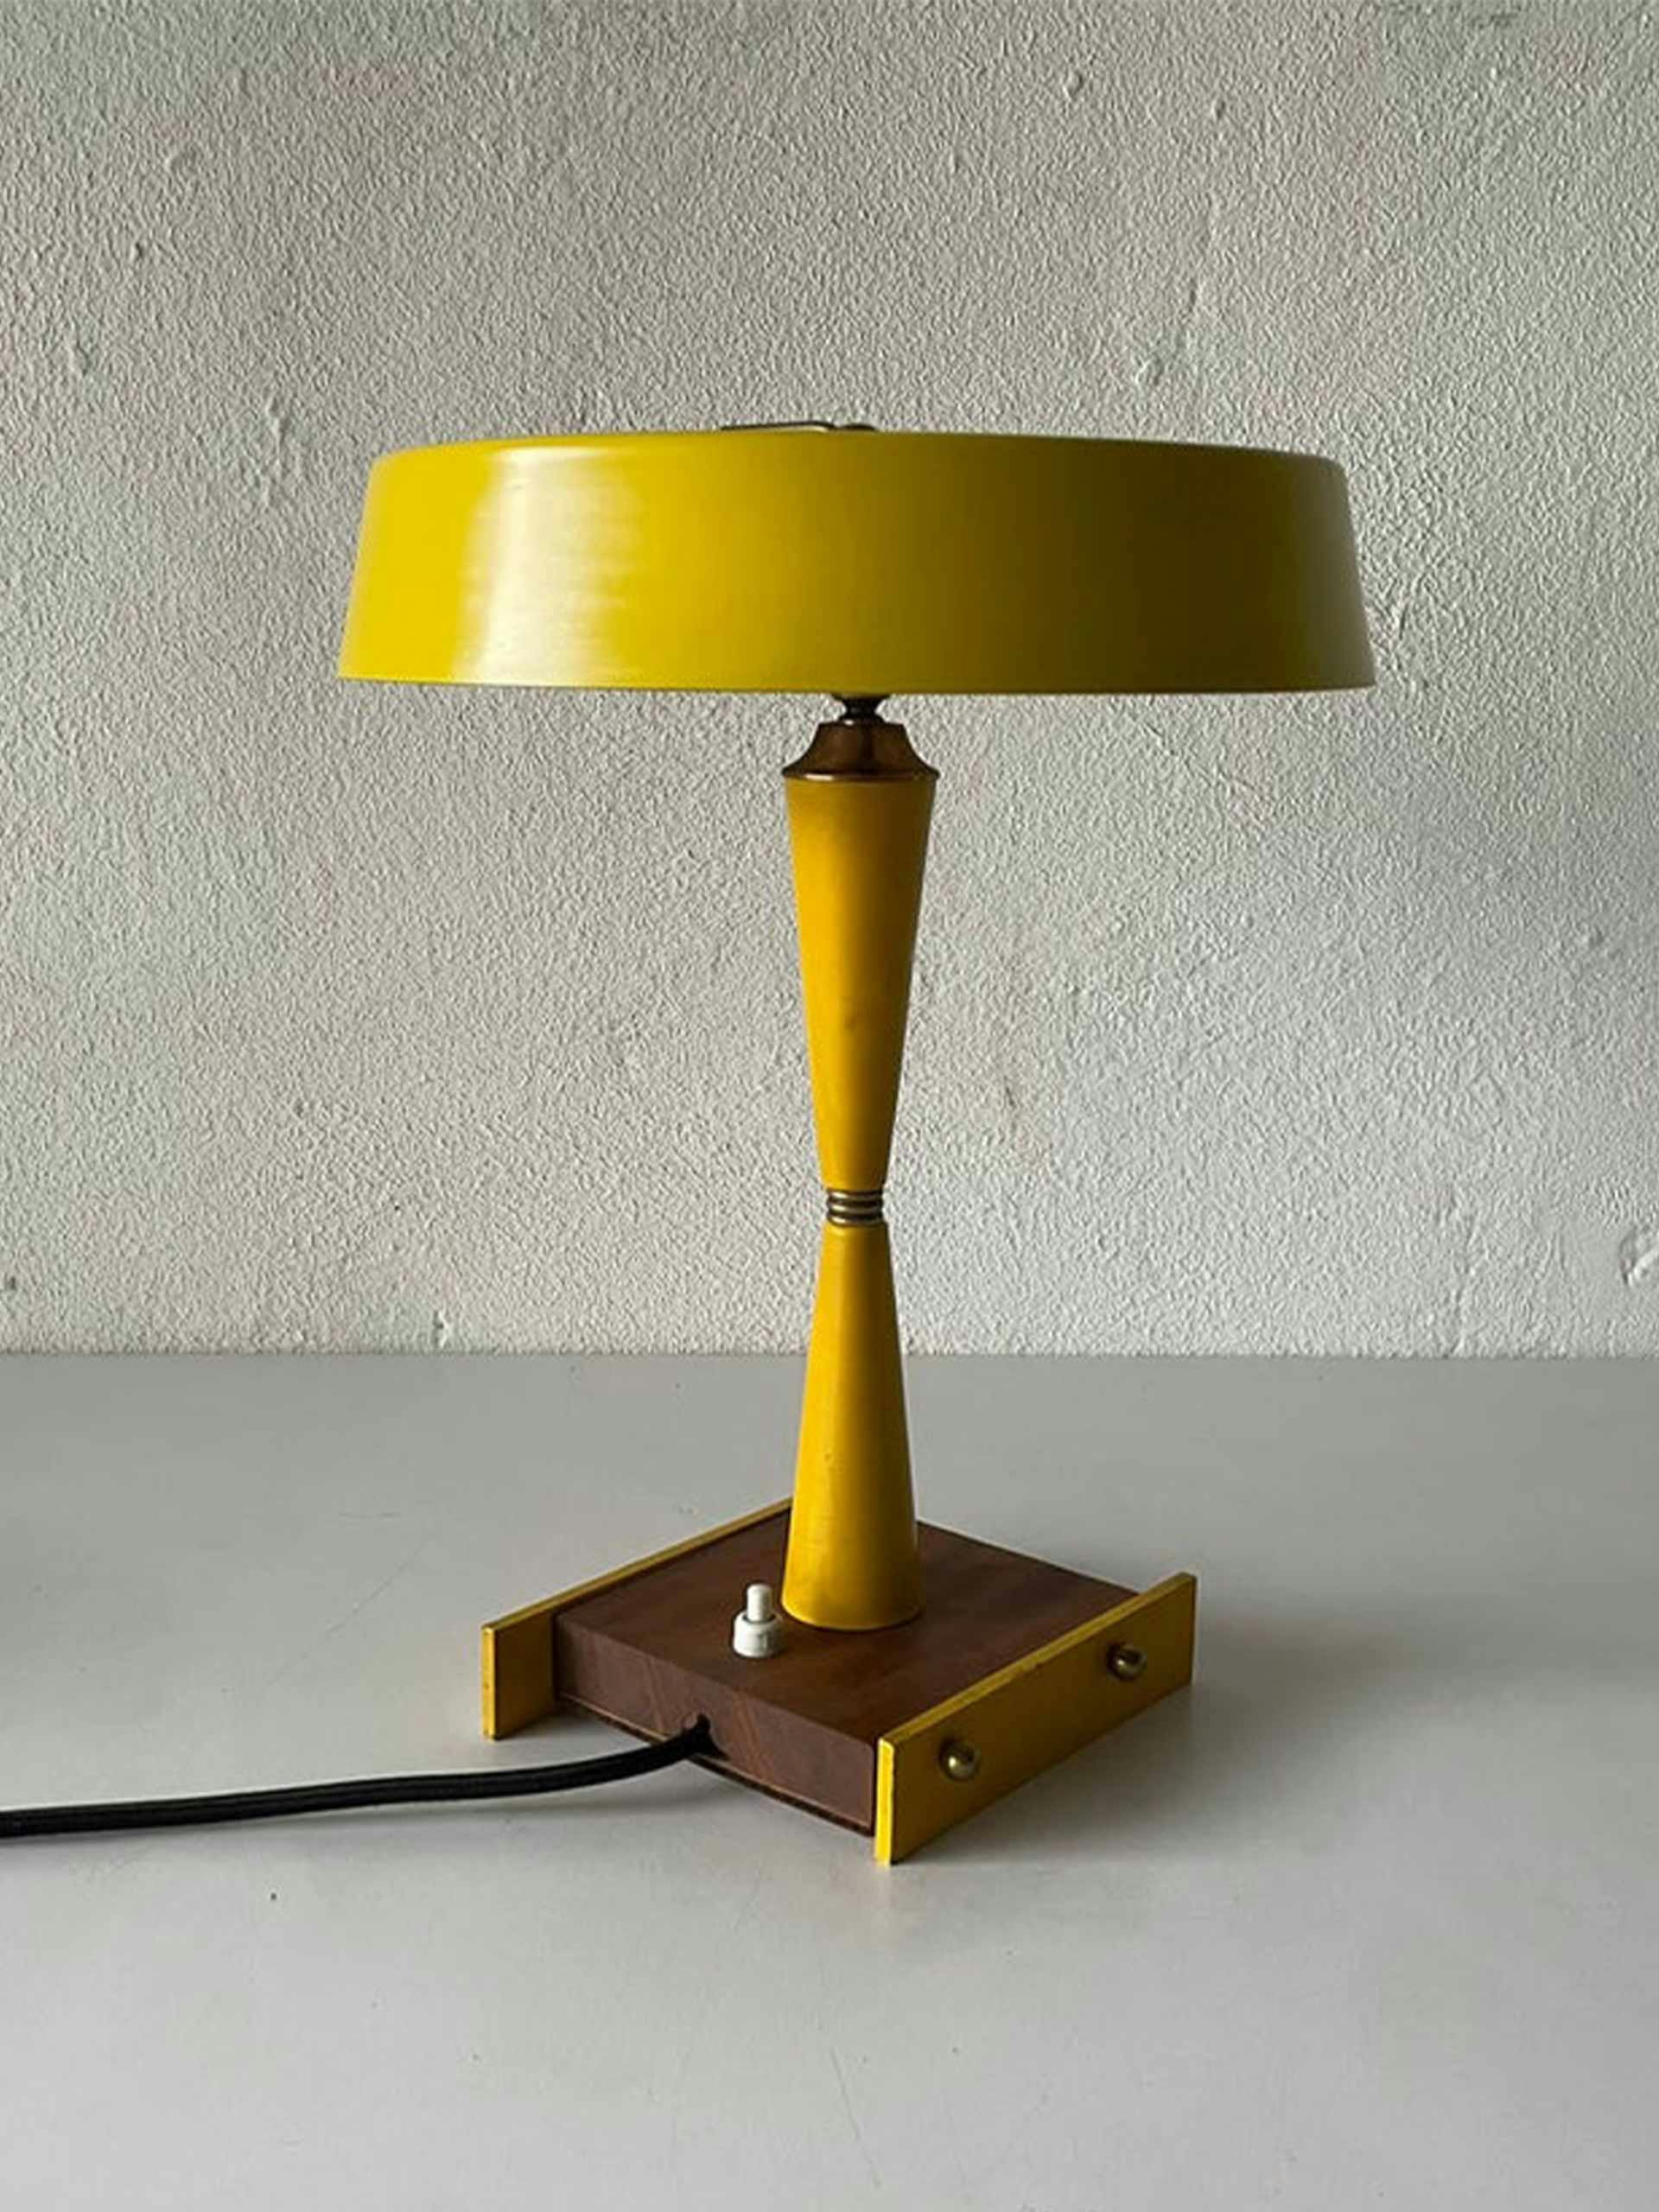 Italian office desk lamp